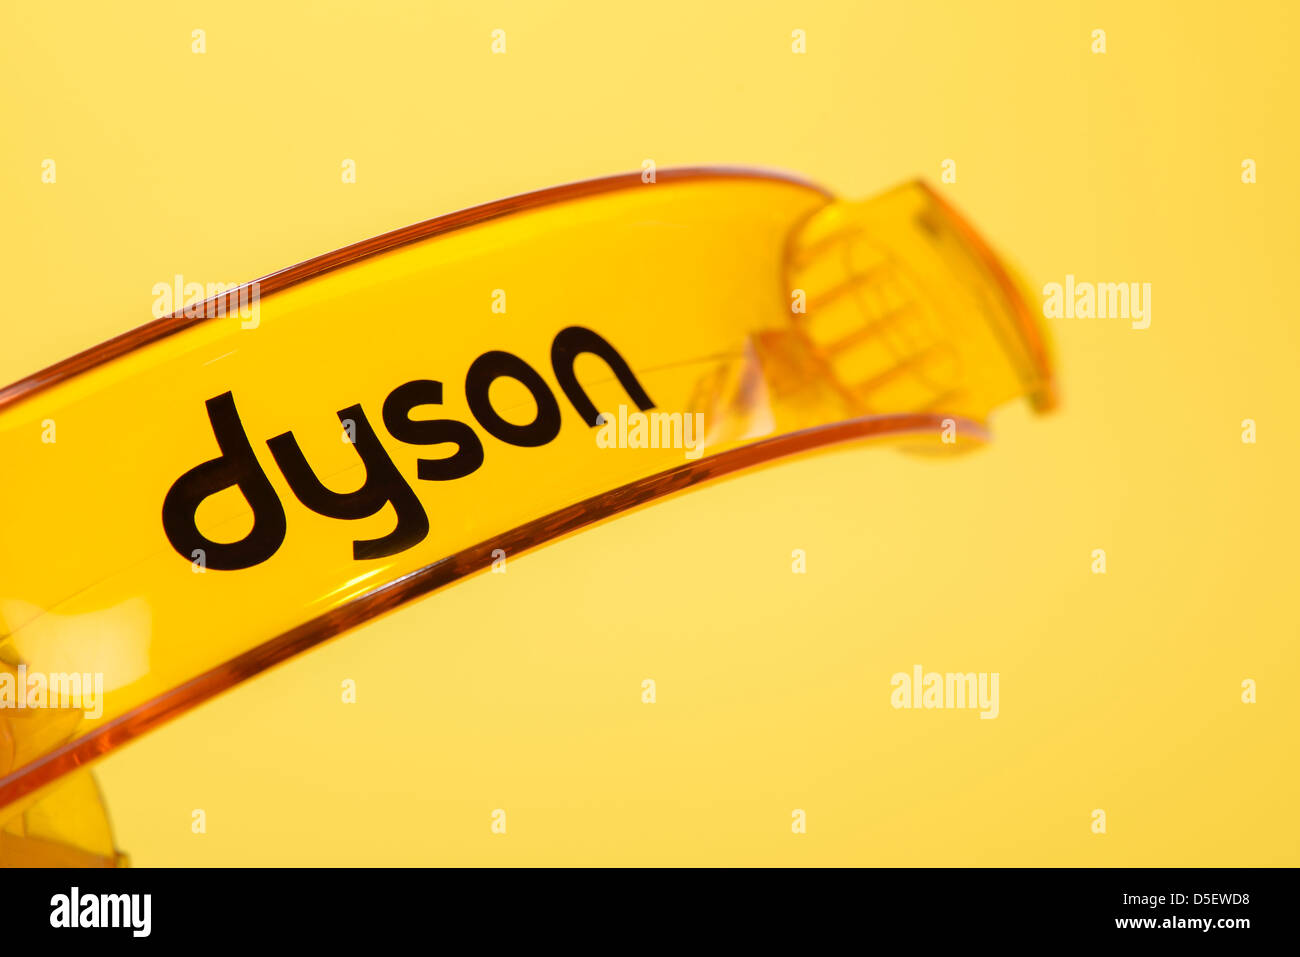 Dyson logo close up Stock Photo